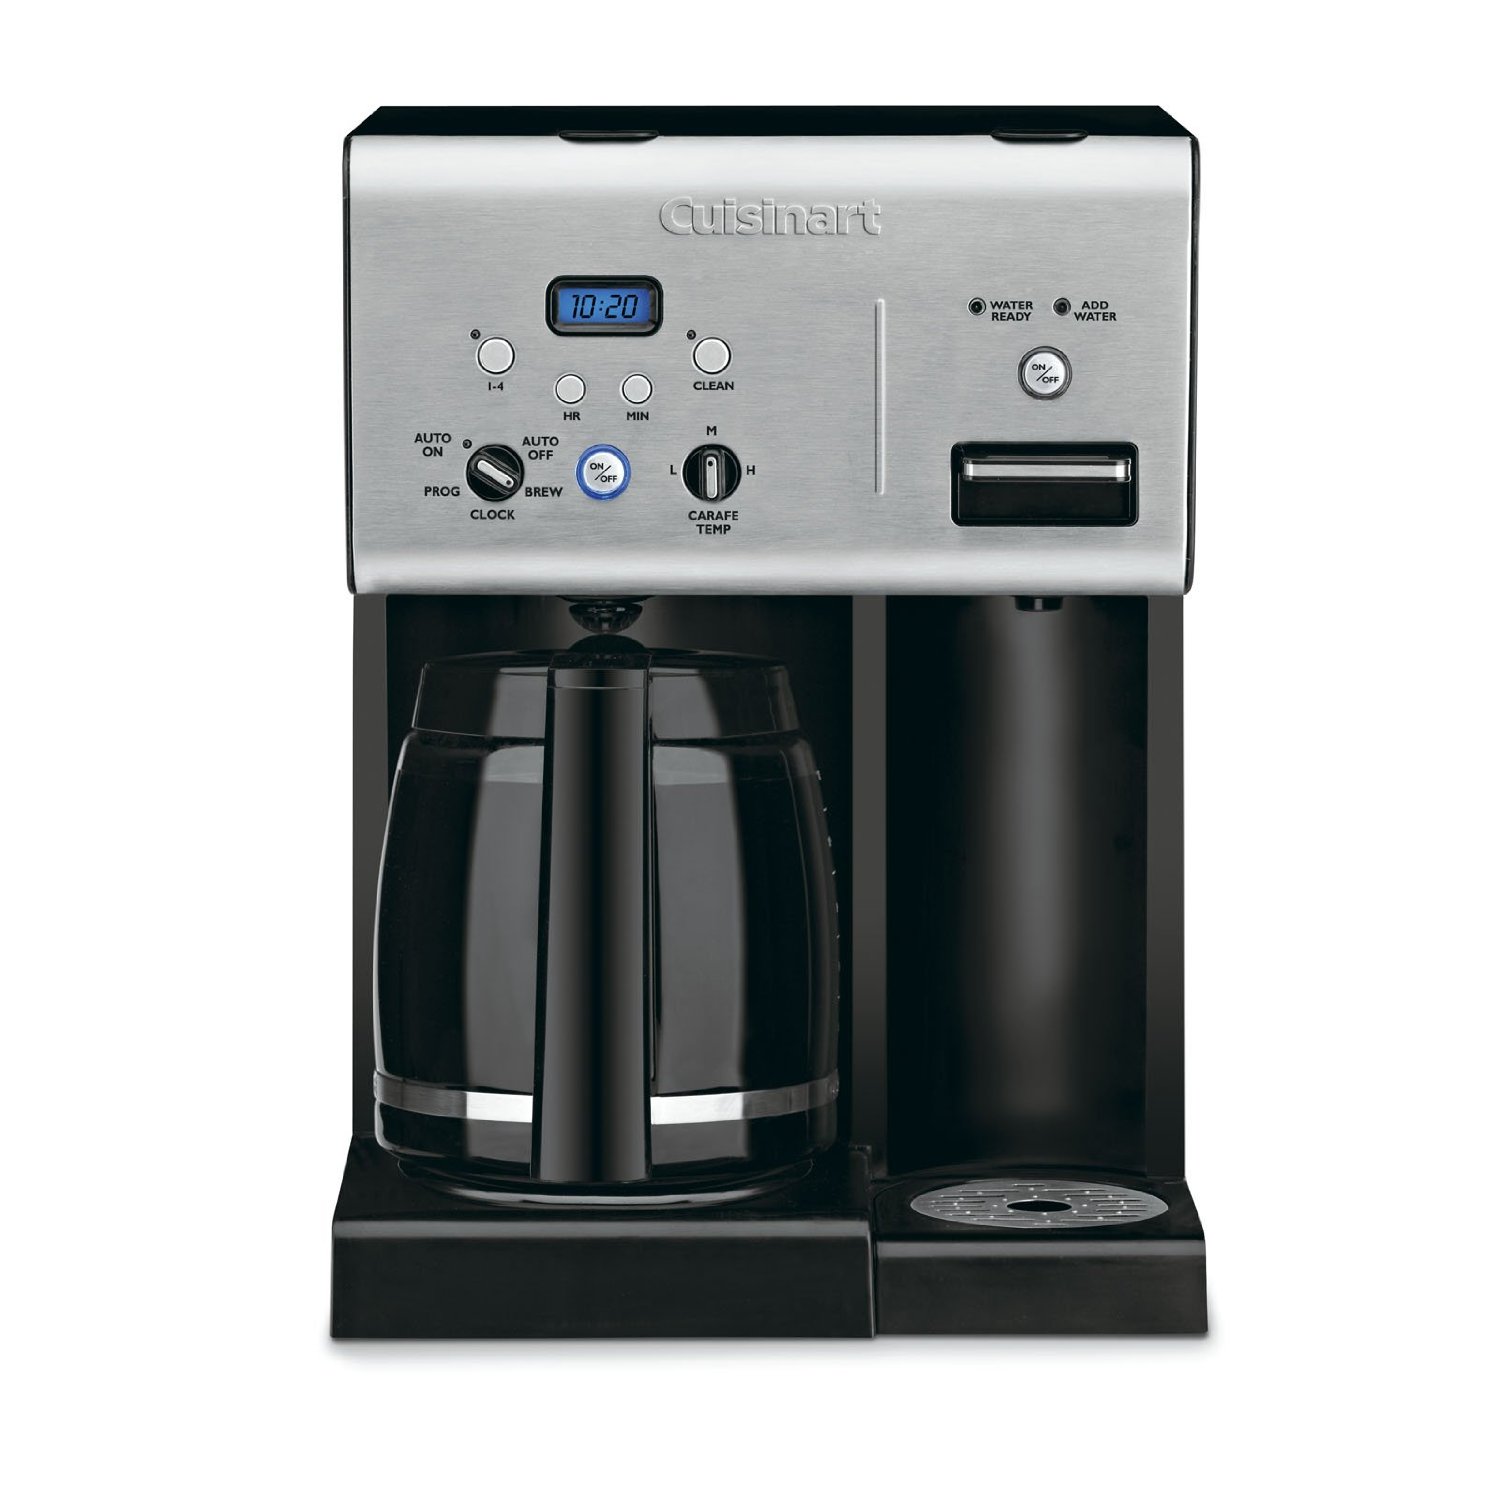 Cuisinart-美康雅 CHW-12 12杯咖啡带热水功能编程滤滴式咖啡机